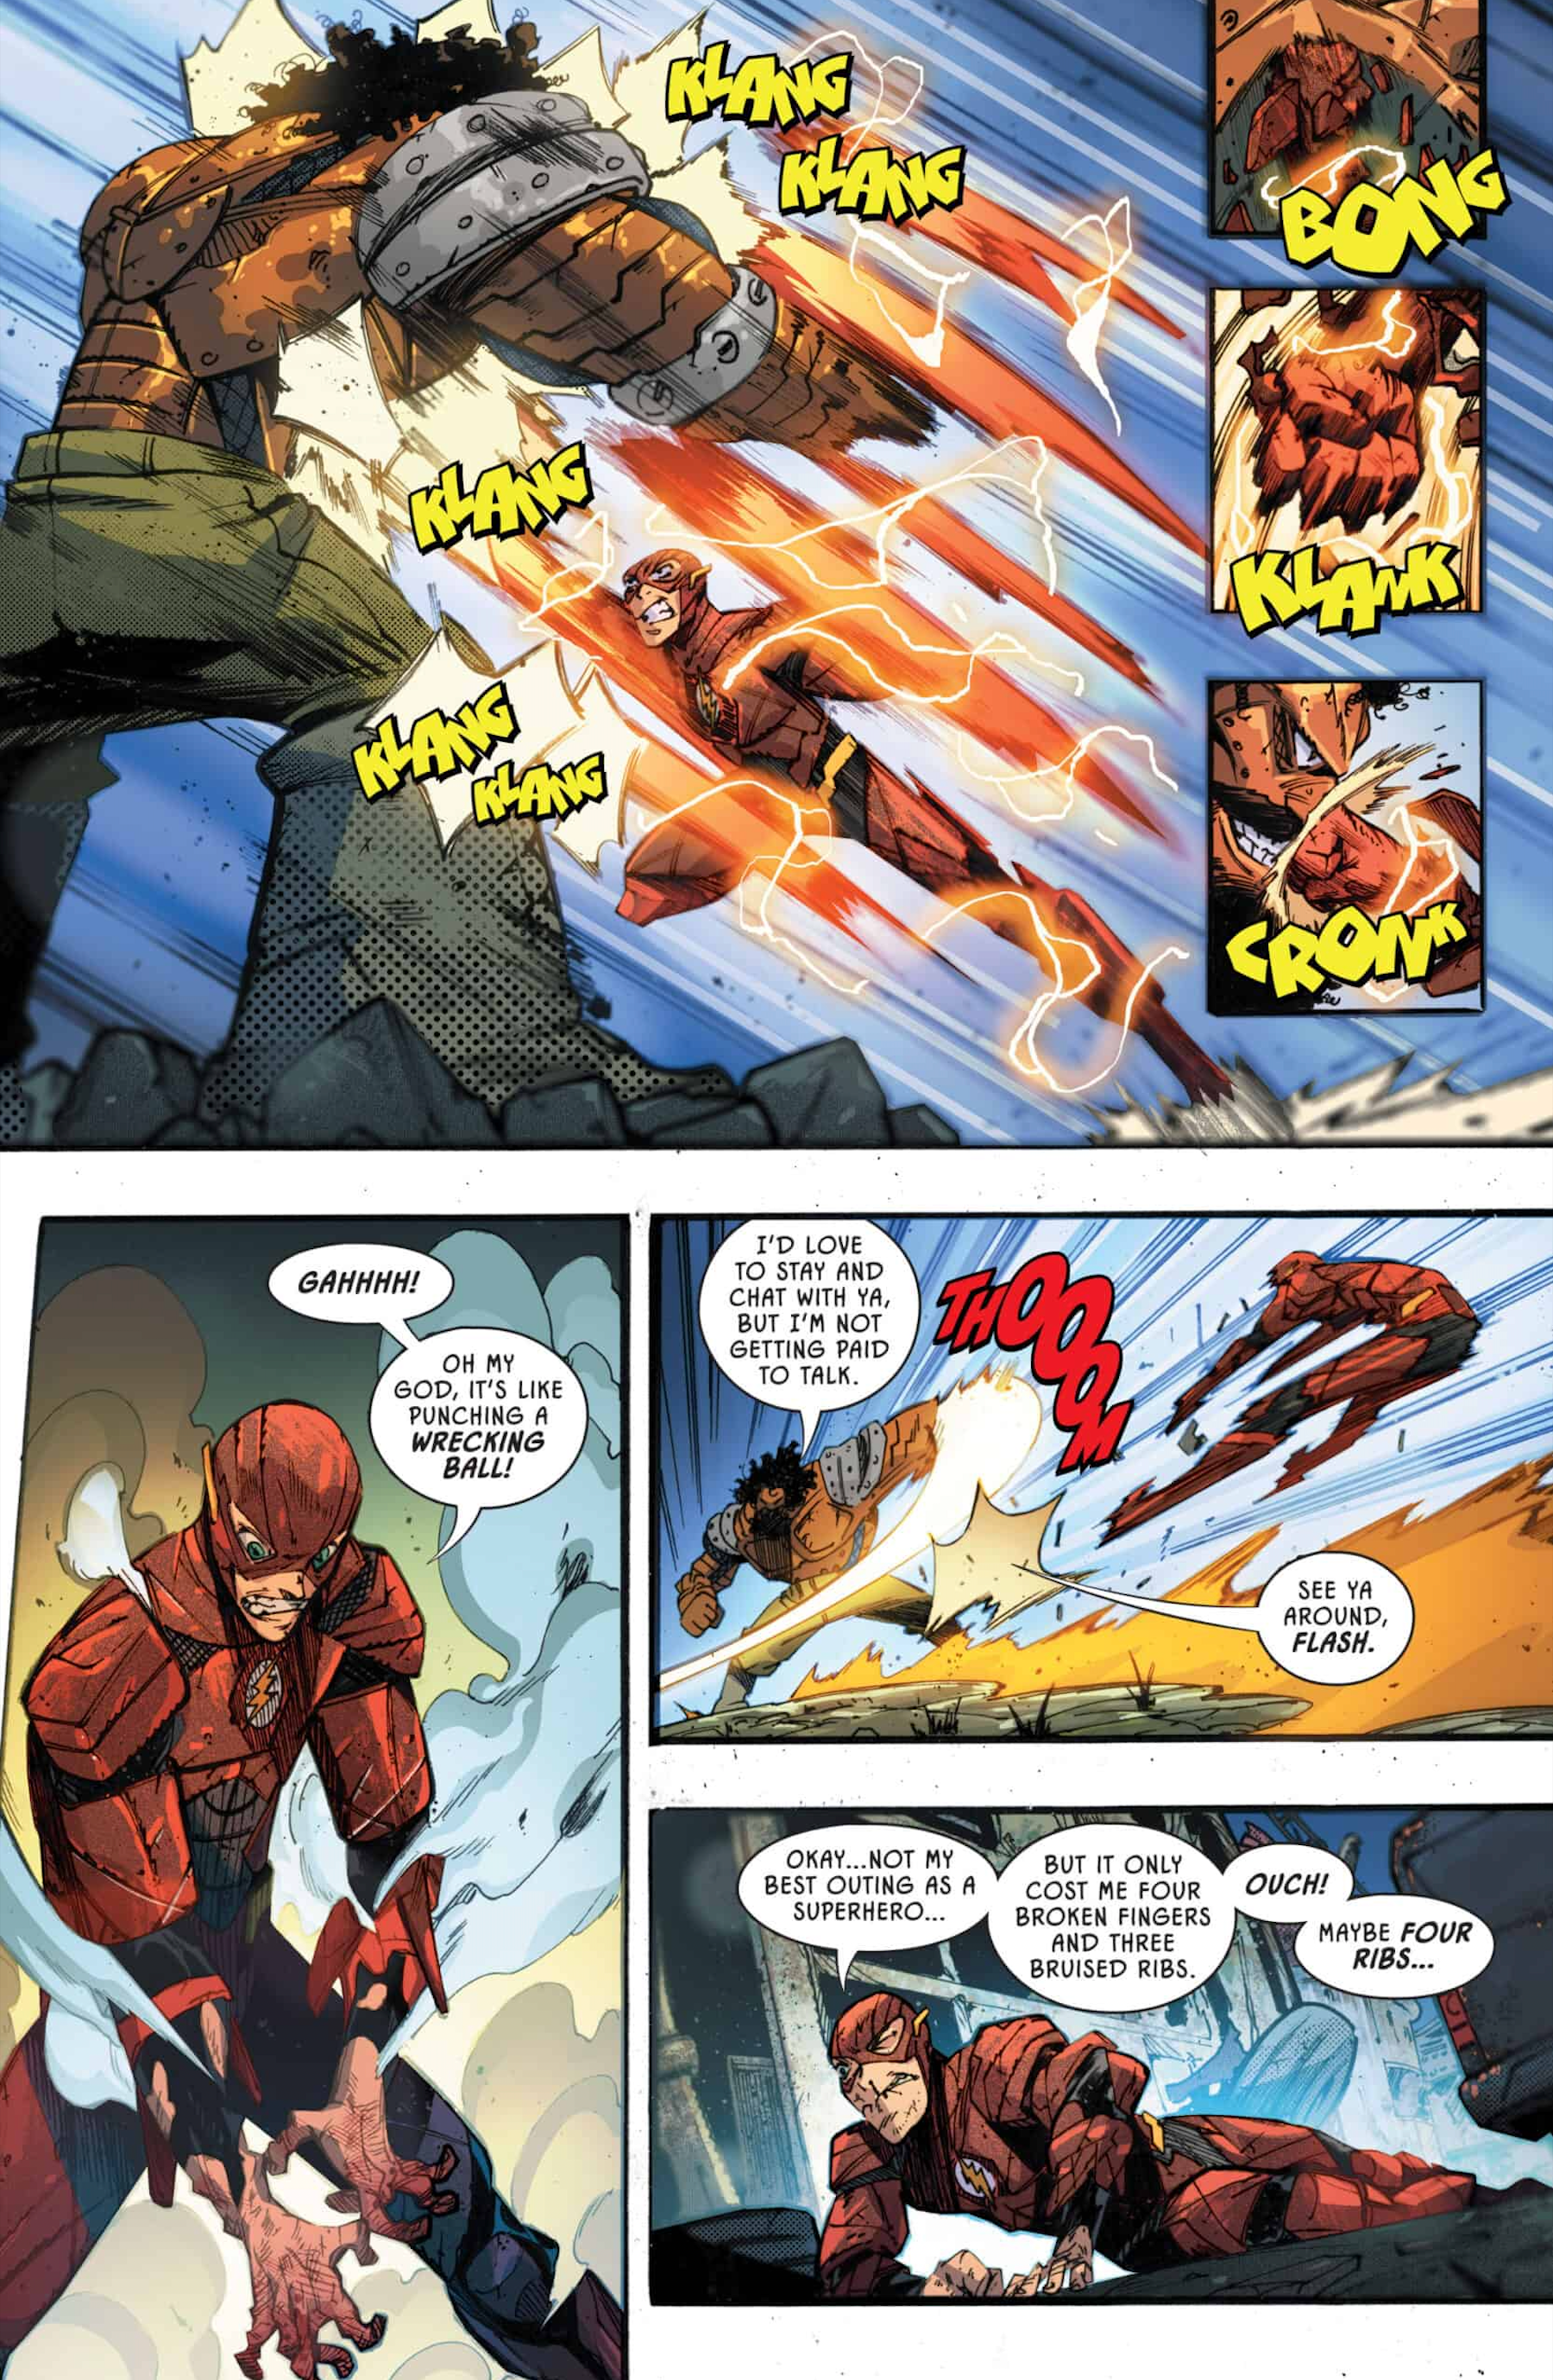 The Flash vs Girder